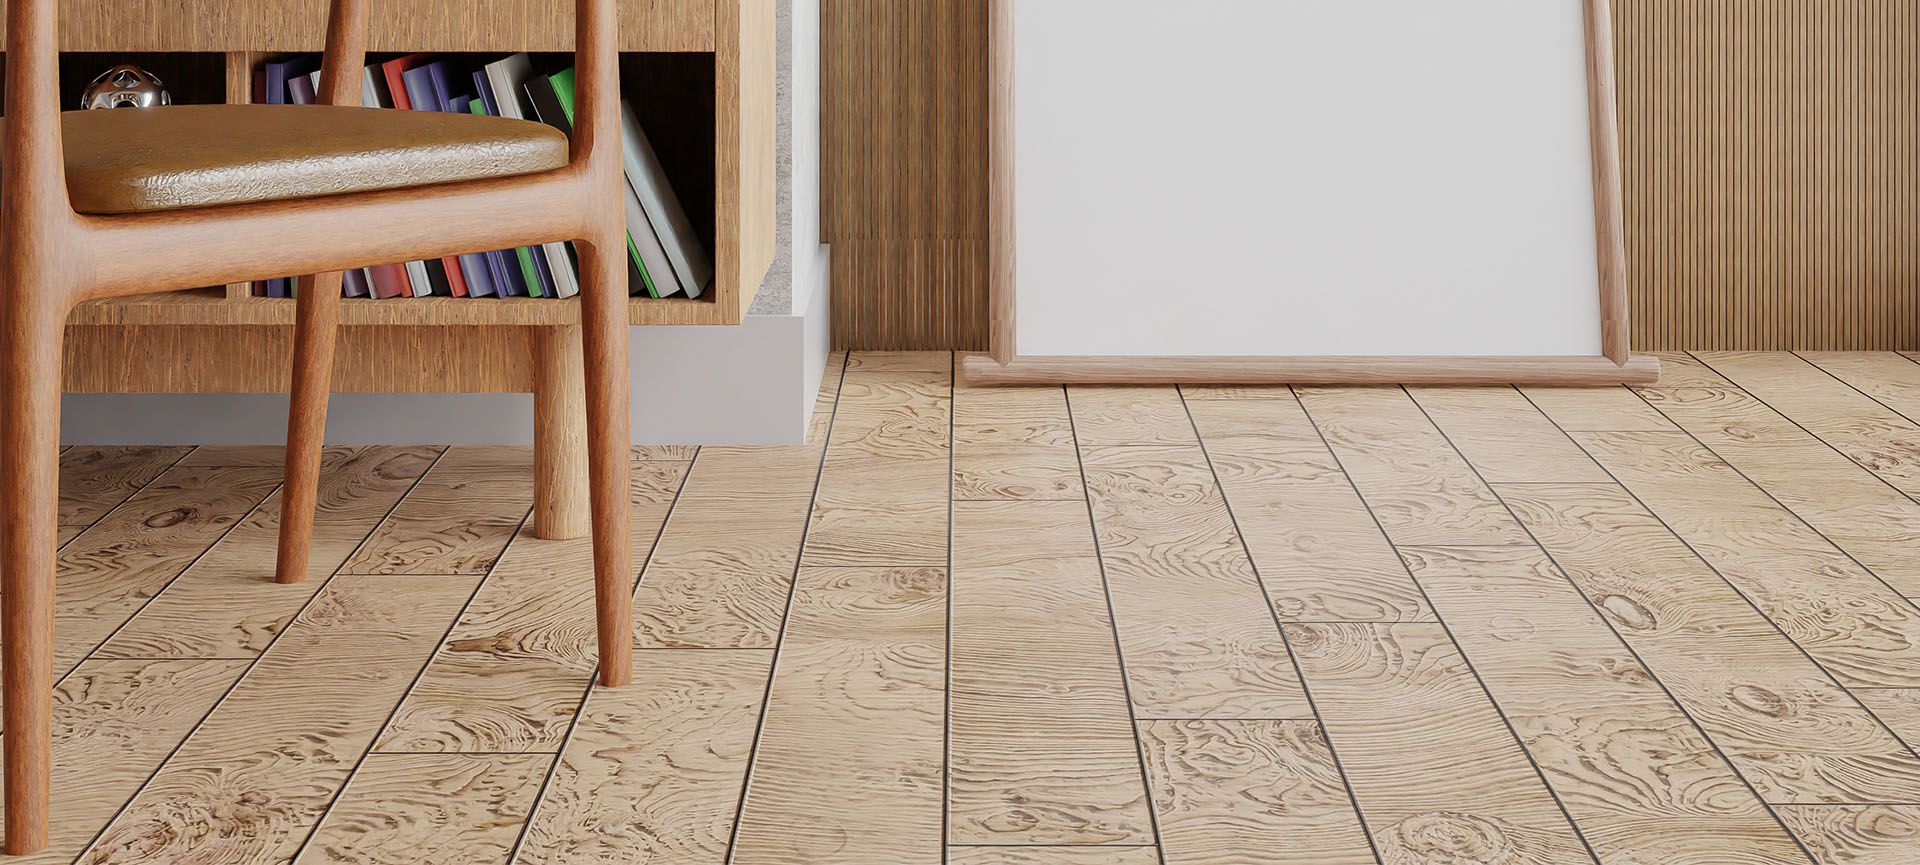 install wide plank floors